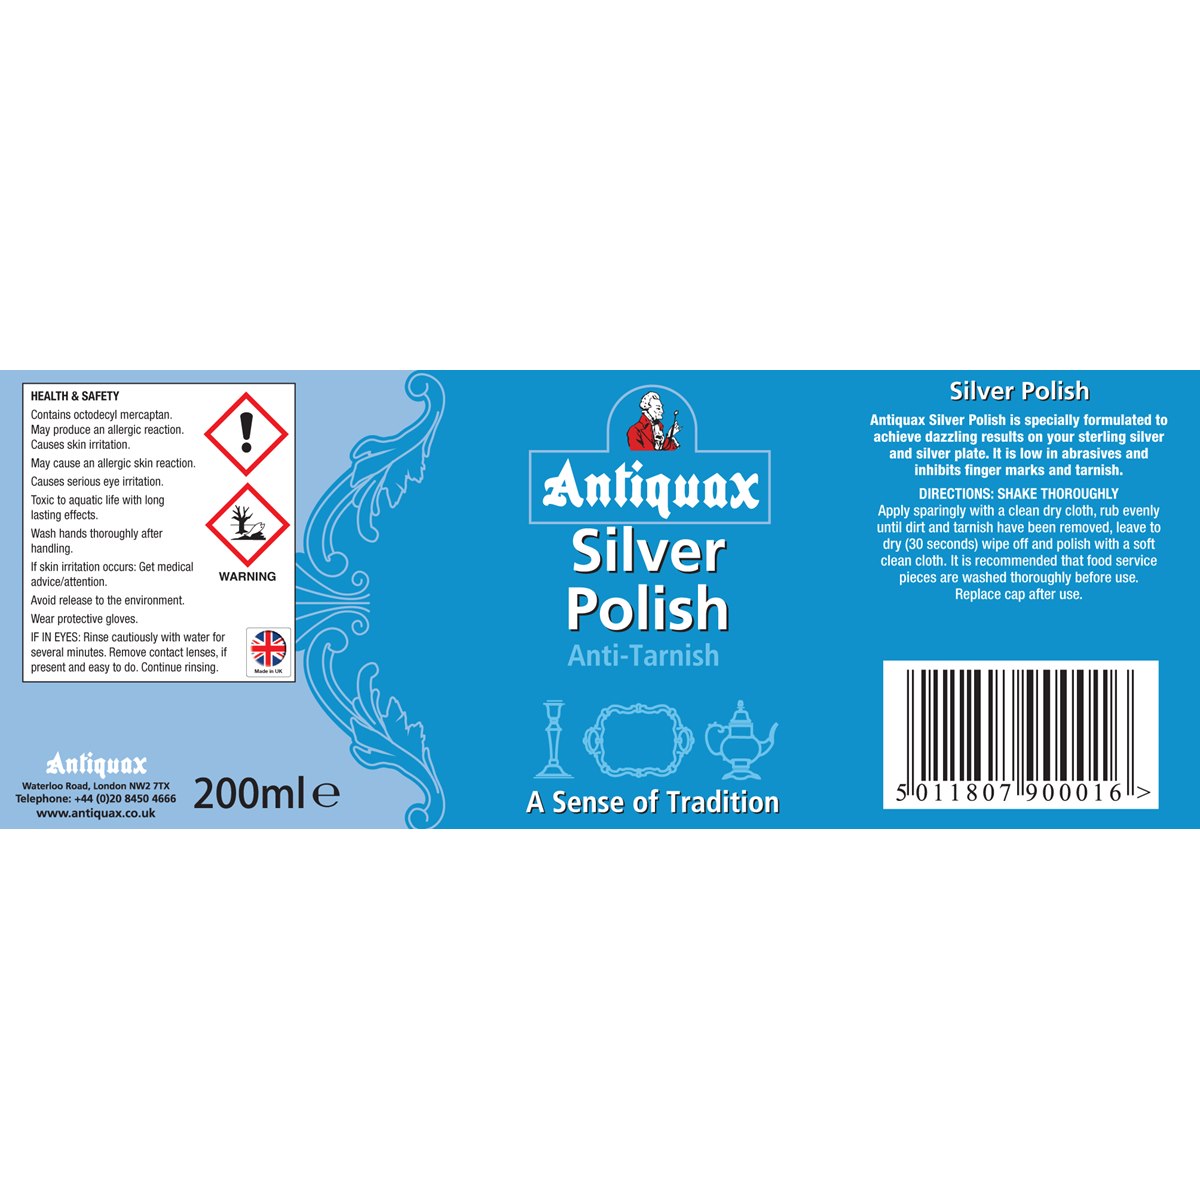 Antiquax Silver Polish Usage Instructions